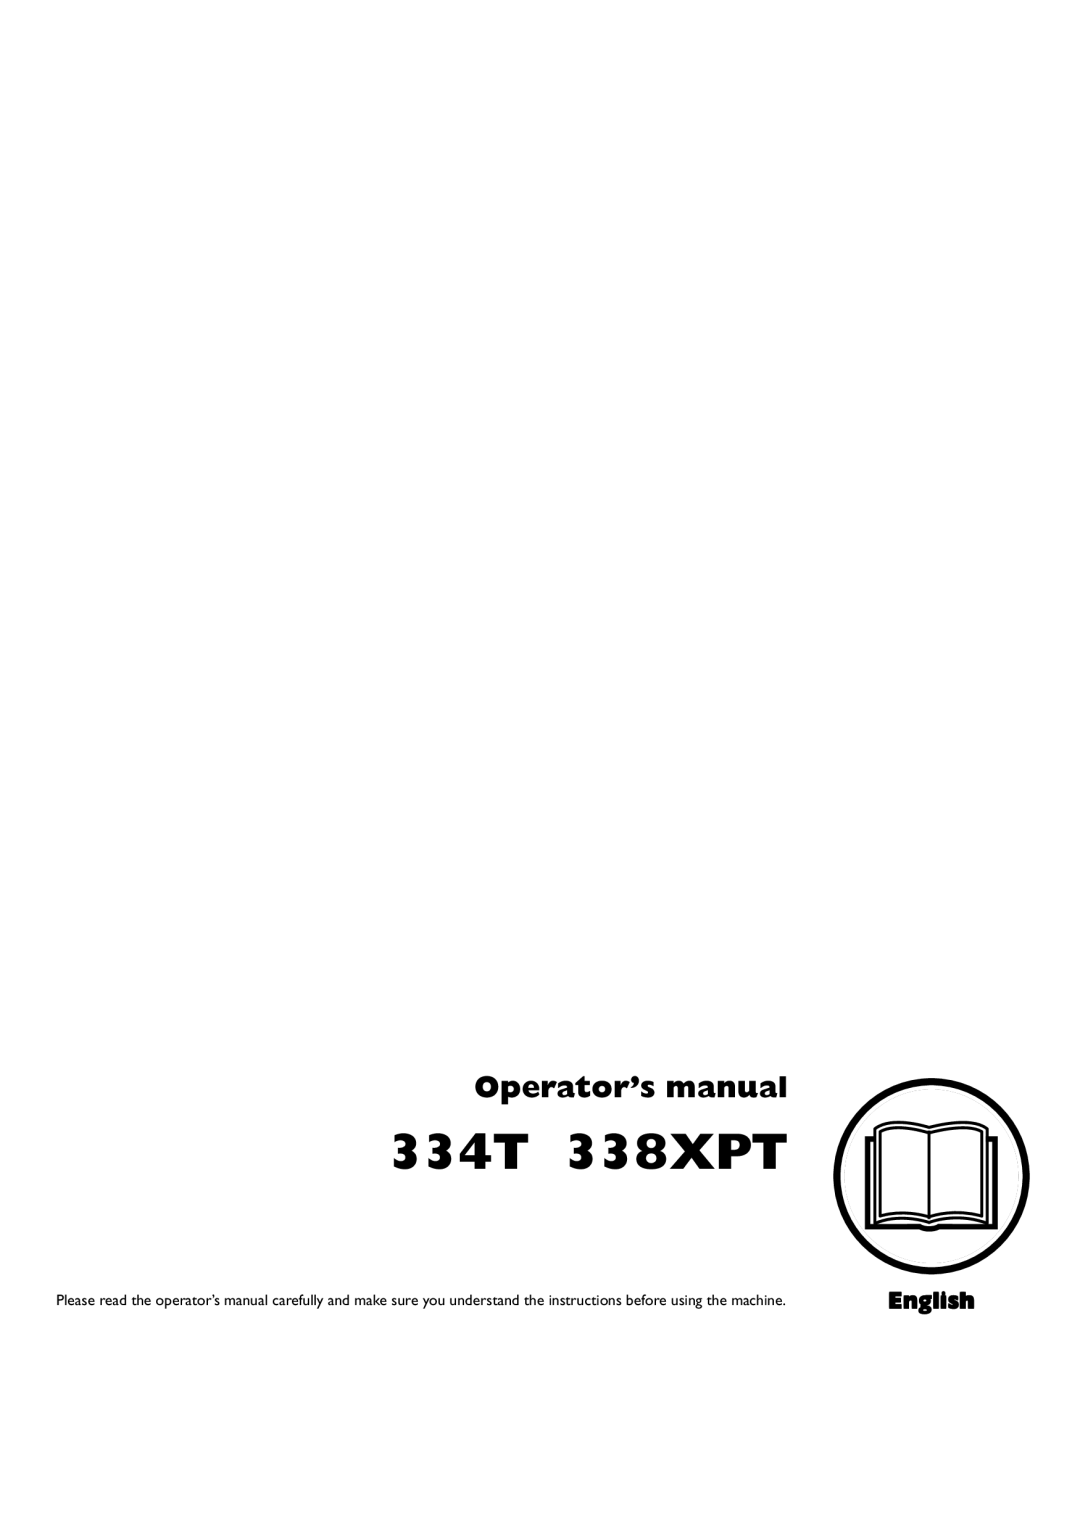 Husqvarna 1153158-95 manual 334T 338XPT, Operator’s manual, English 